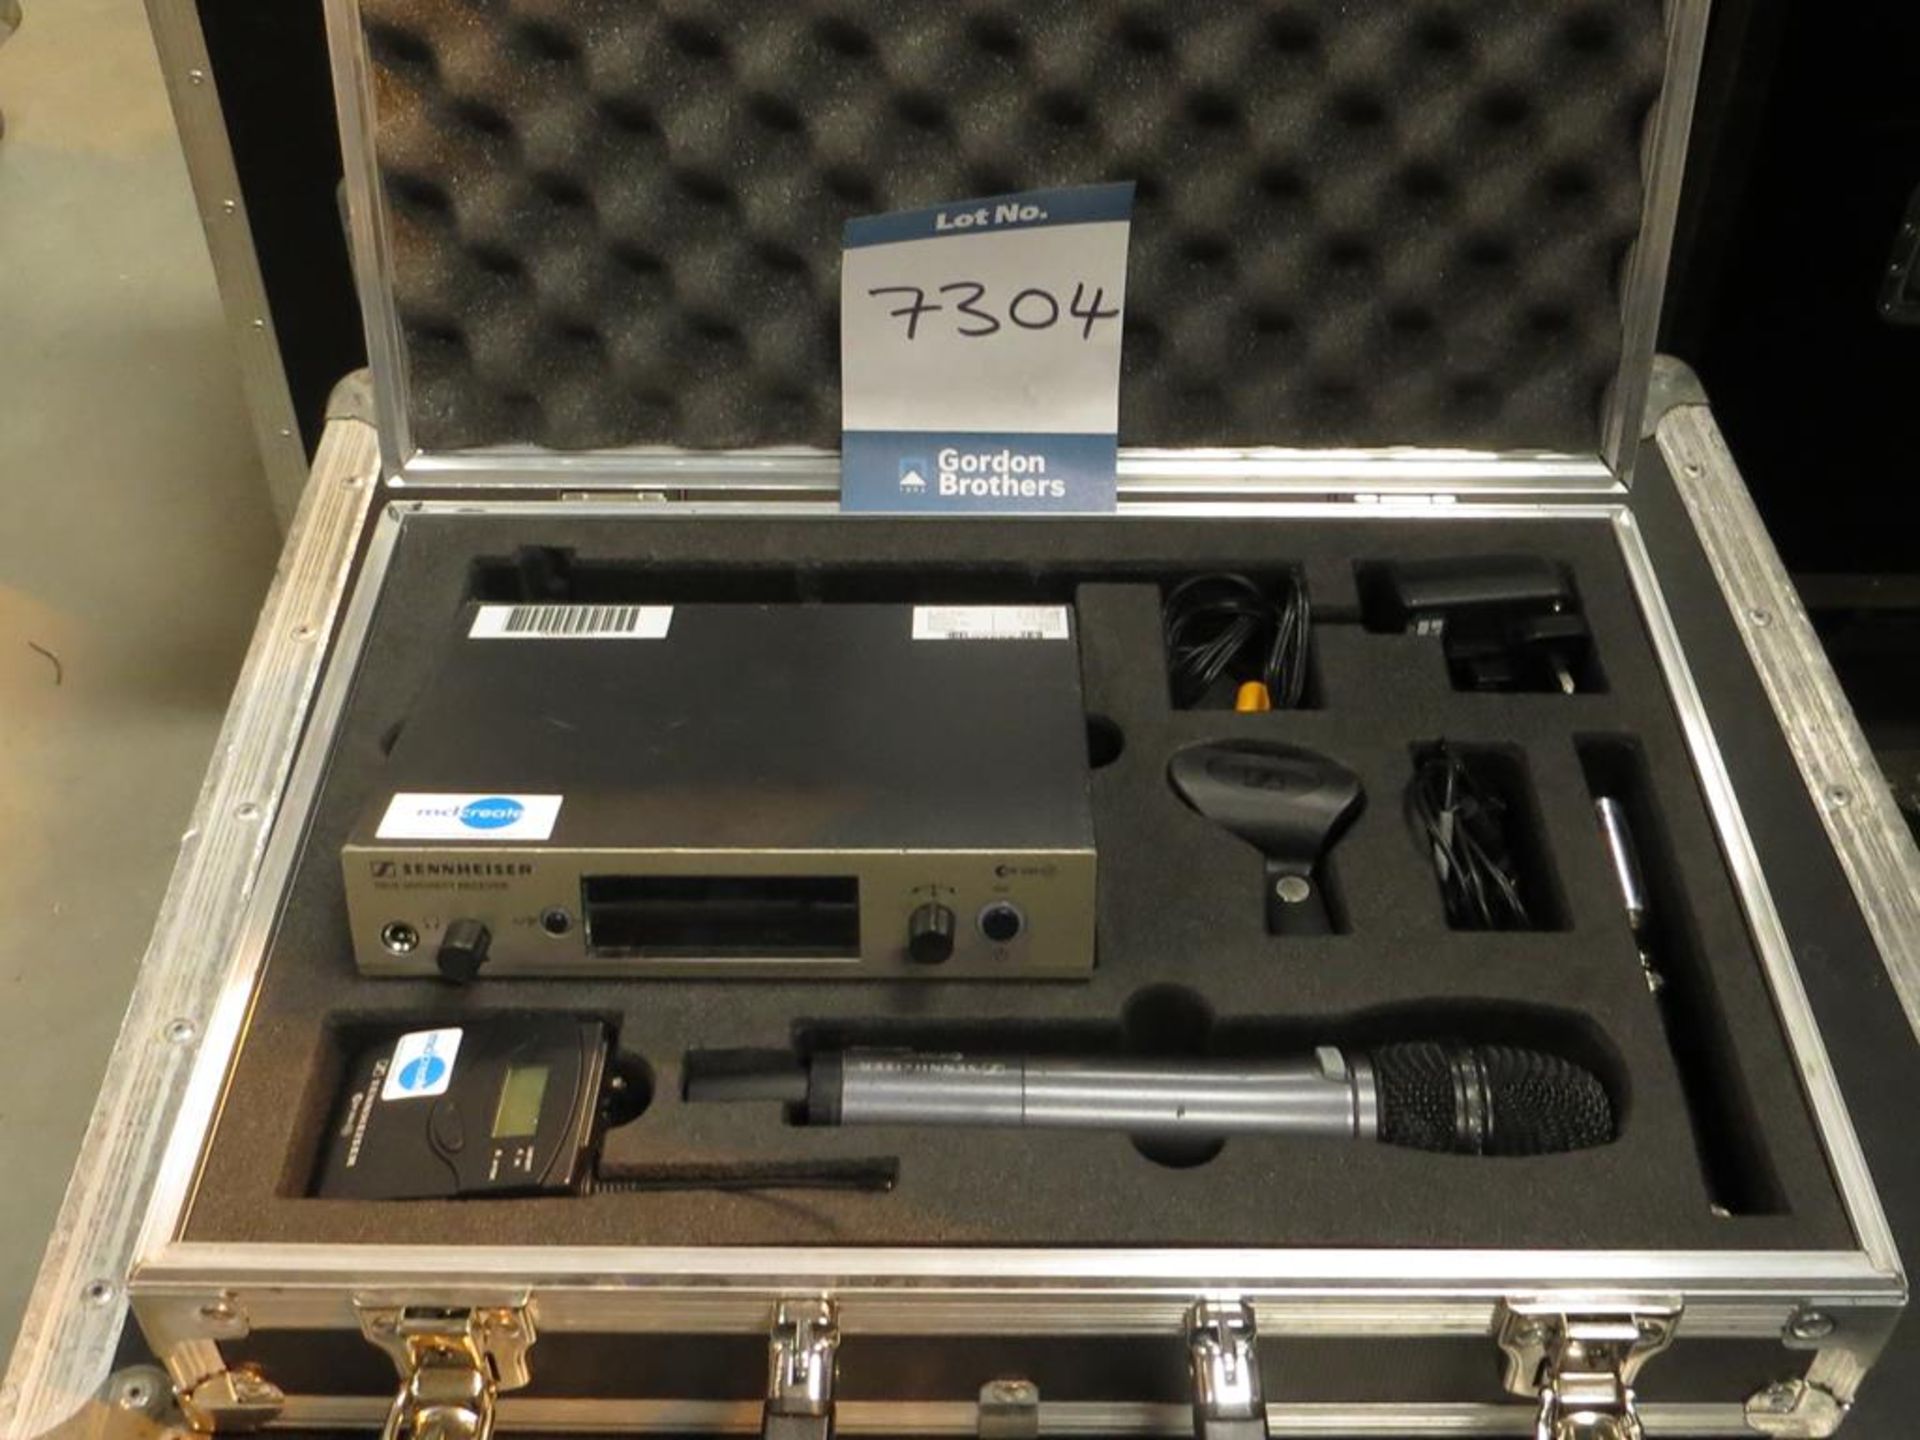 Sennheiser radio microphone kit comprising EM300 G3 receiver, EW300 G3 radio microphone, SK300